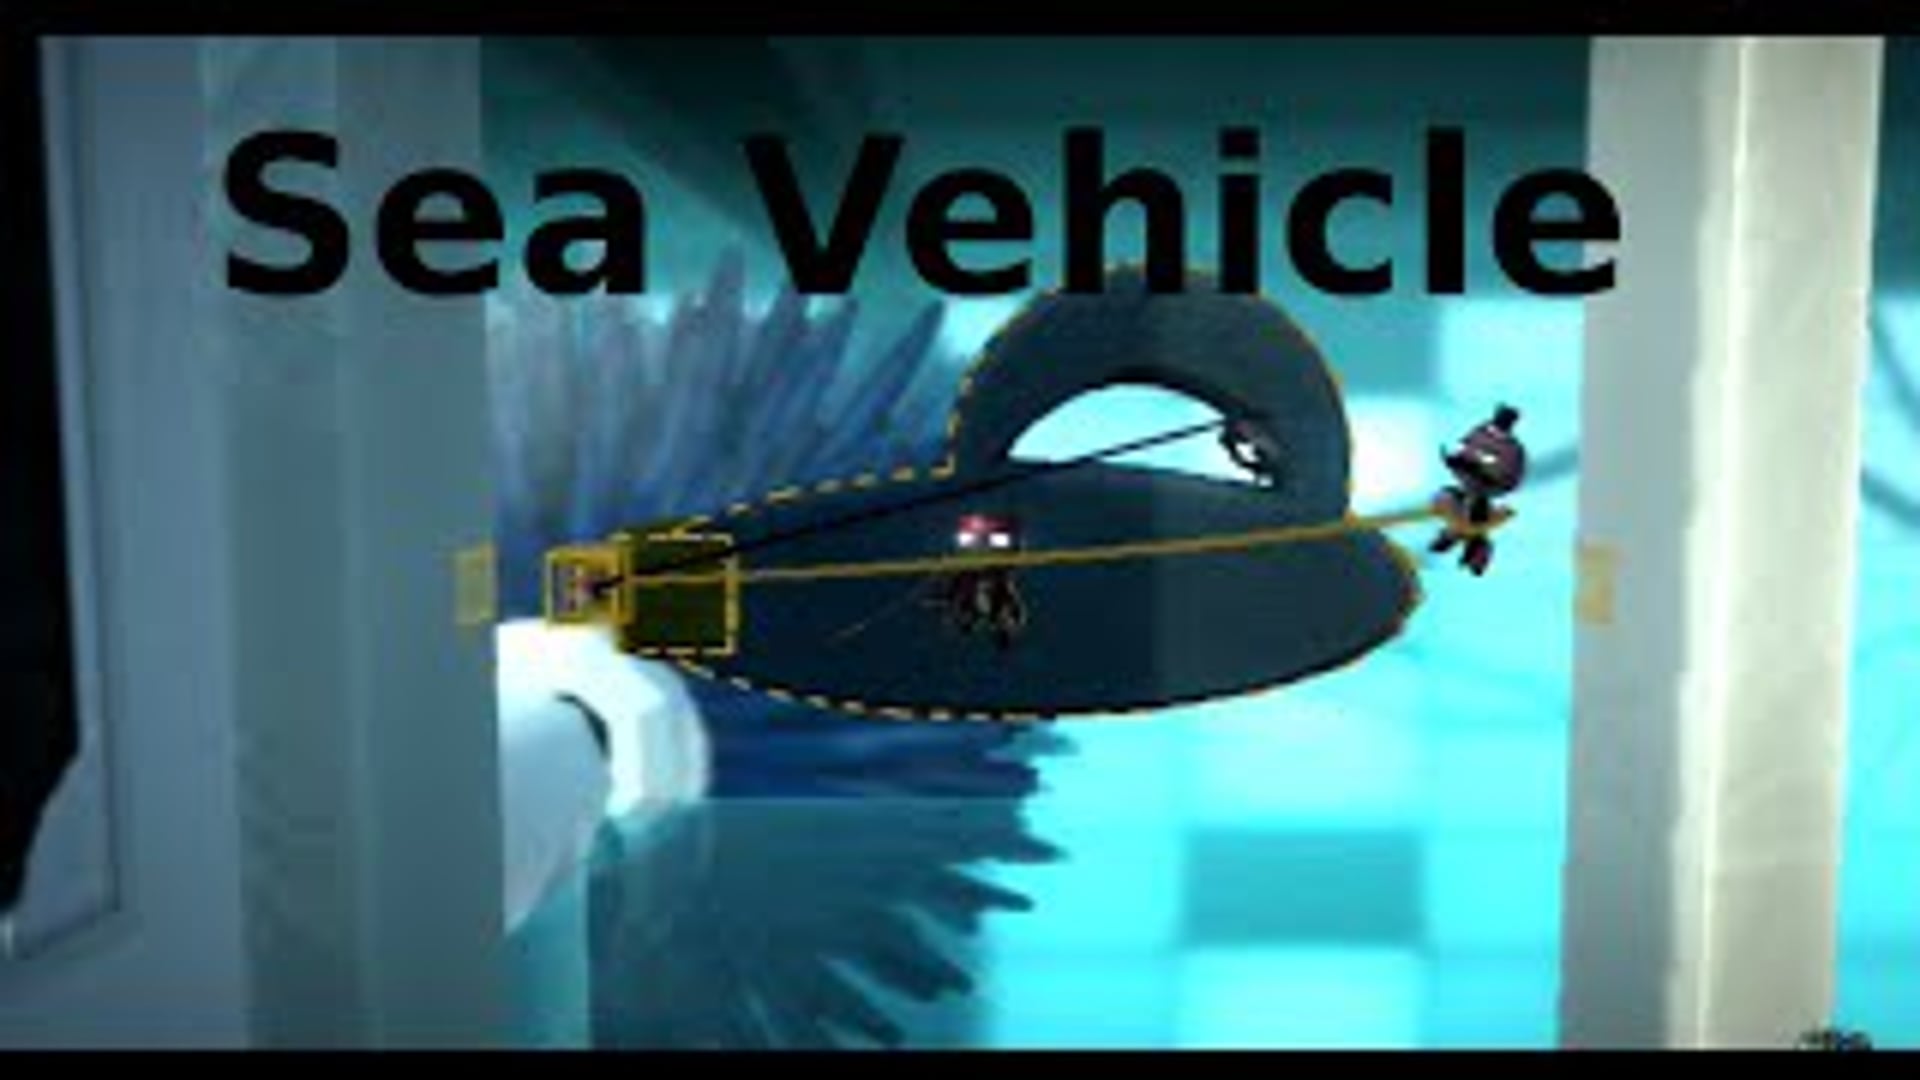 LBP 2 Building Challenge - #2 - Sea Vehicle